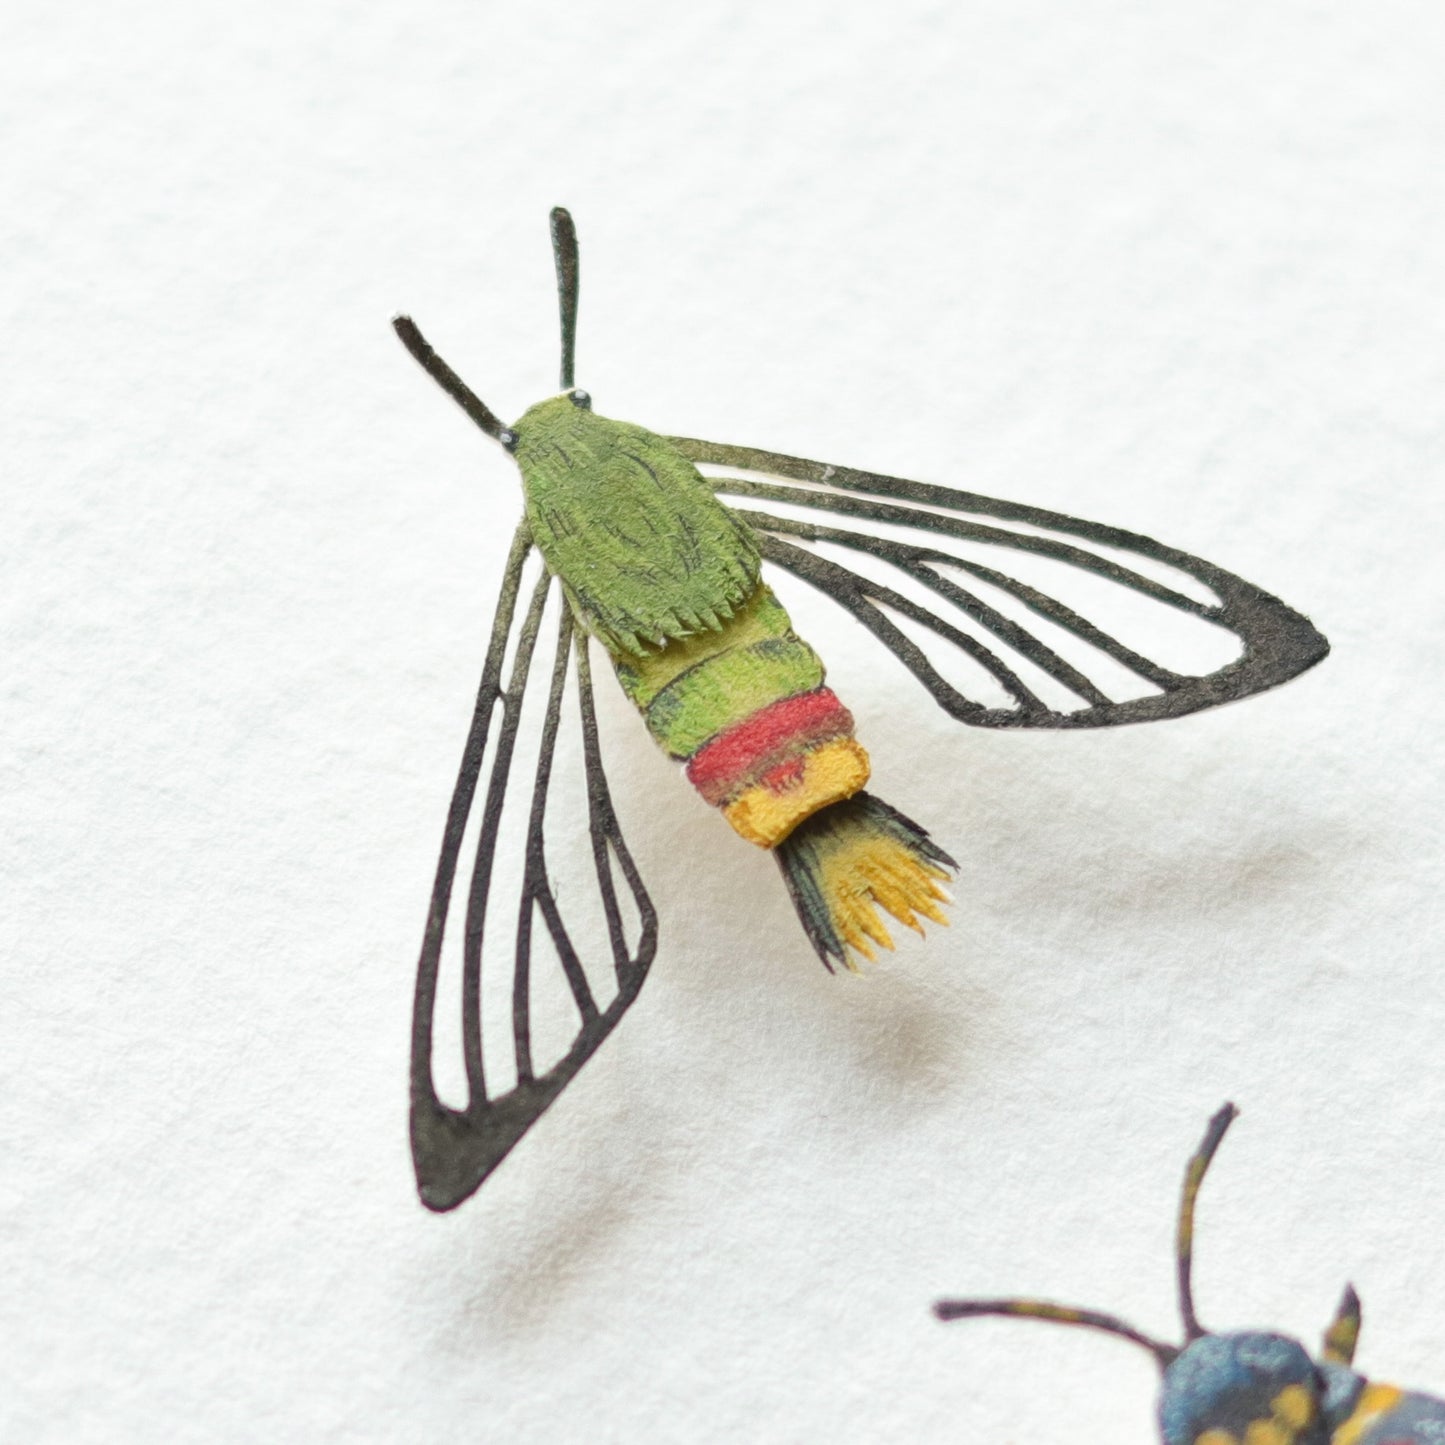 Moth specimen